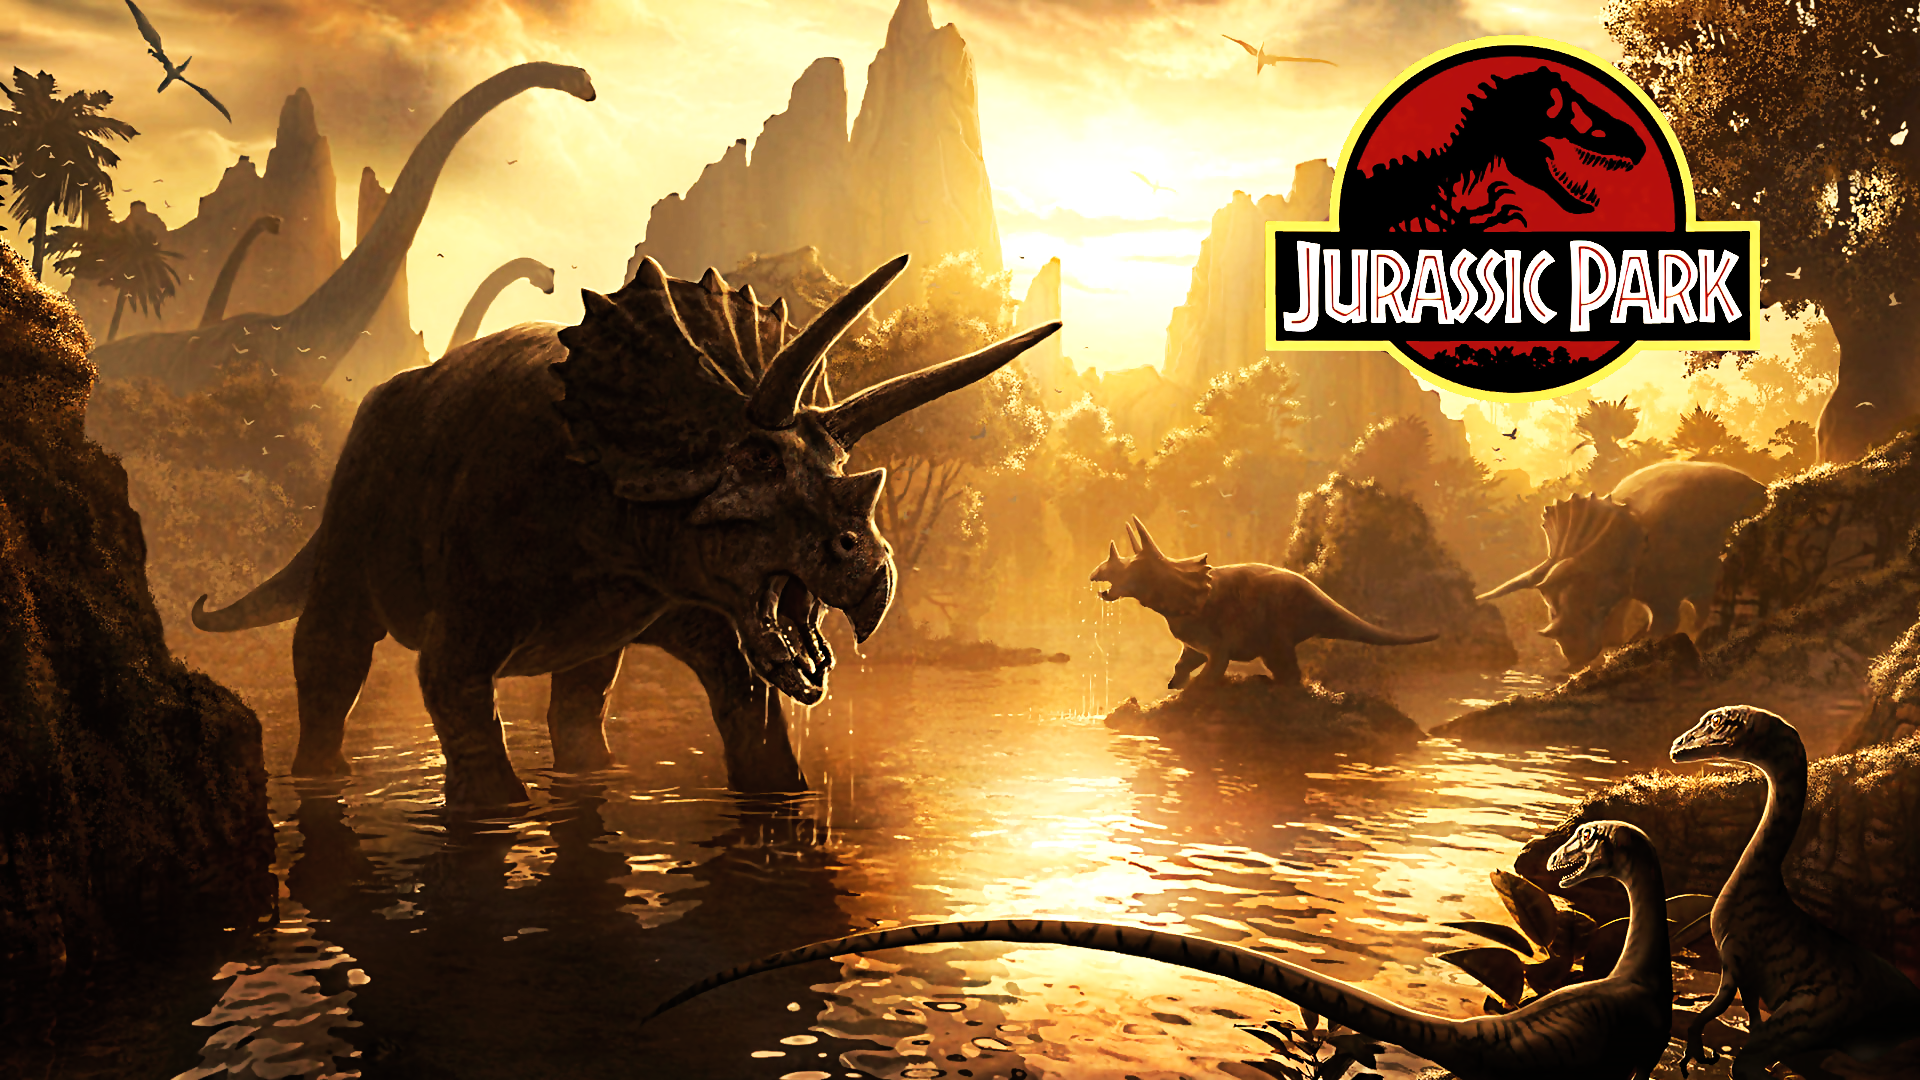 Jurassic Park Wallpaper Image